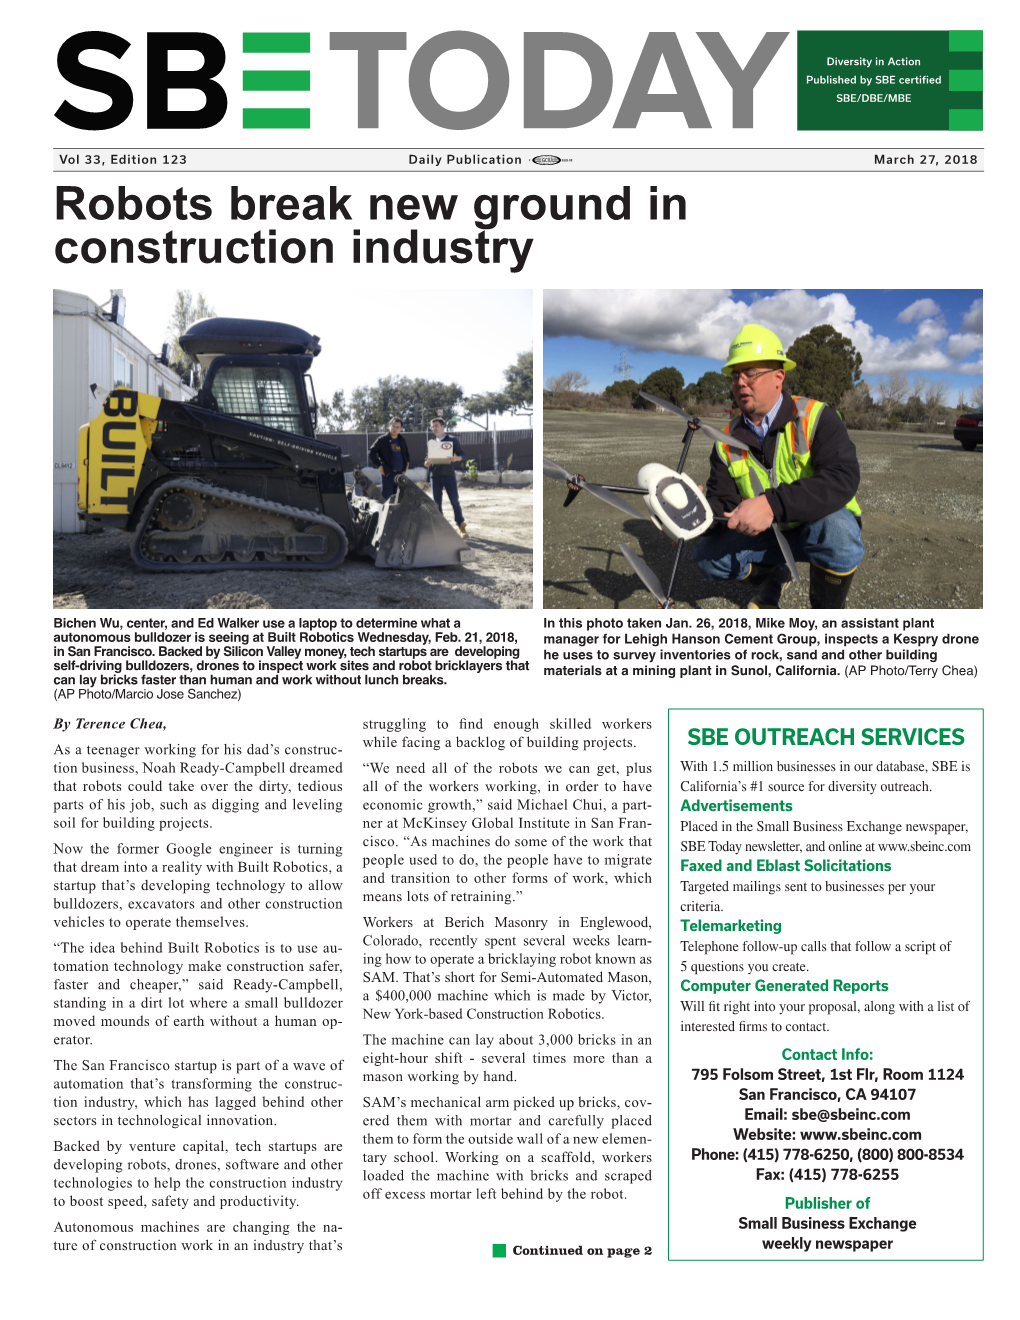 Robots Break New Ground in Construction Industry